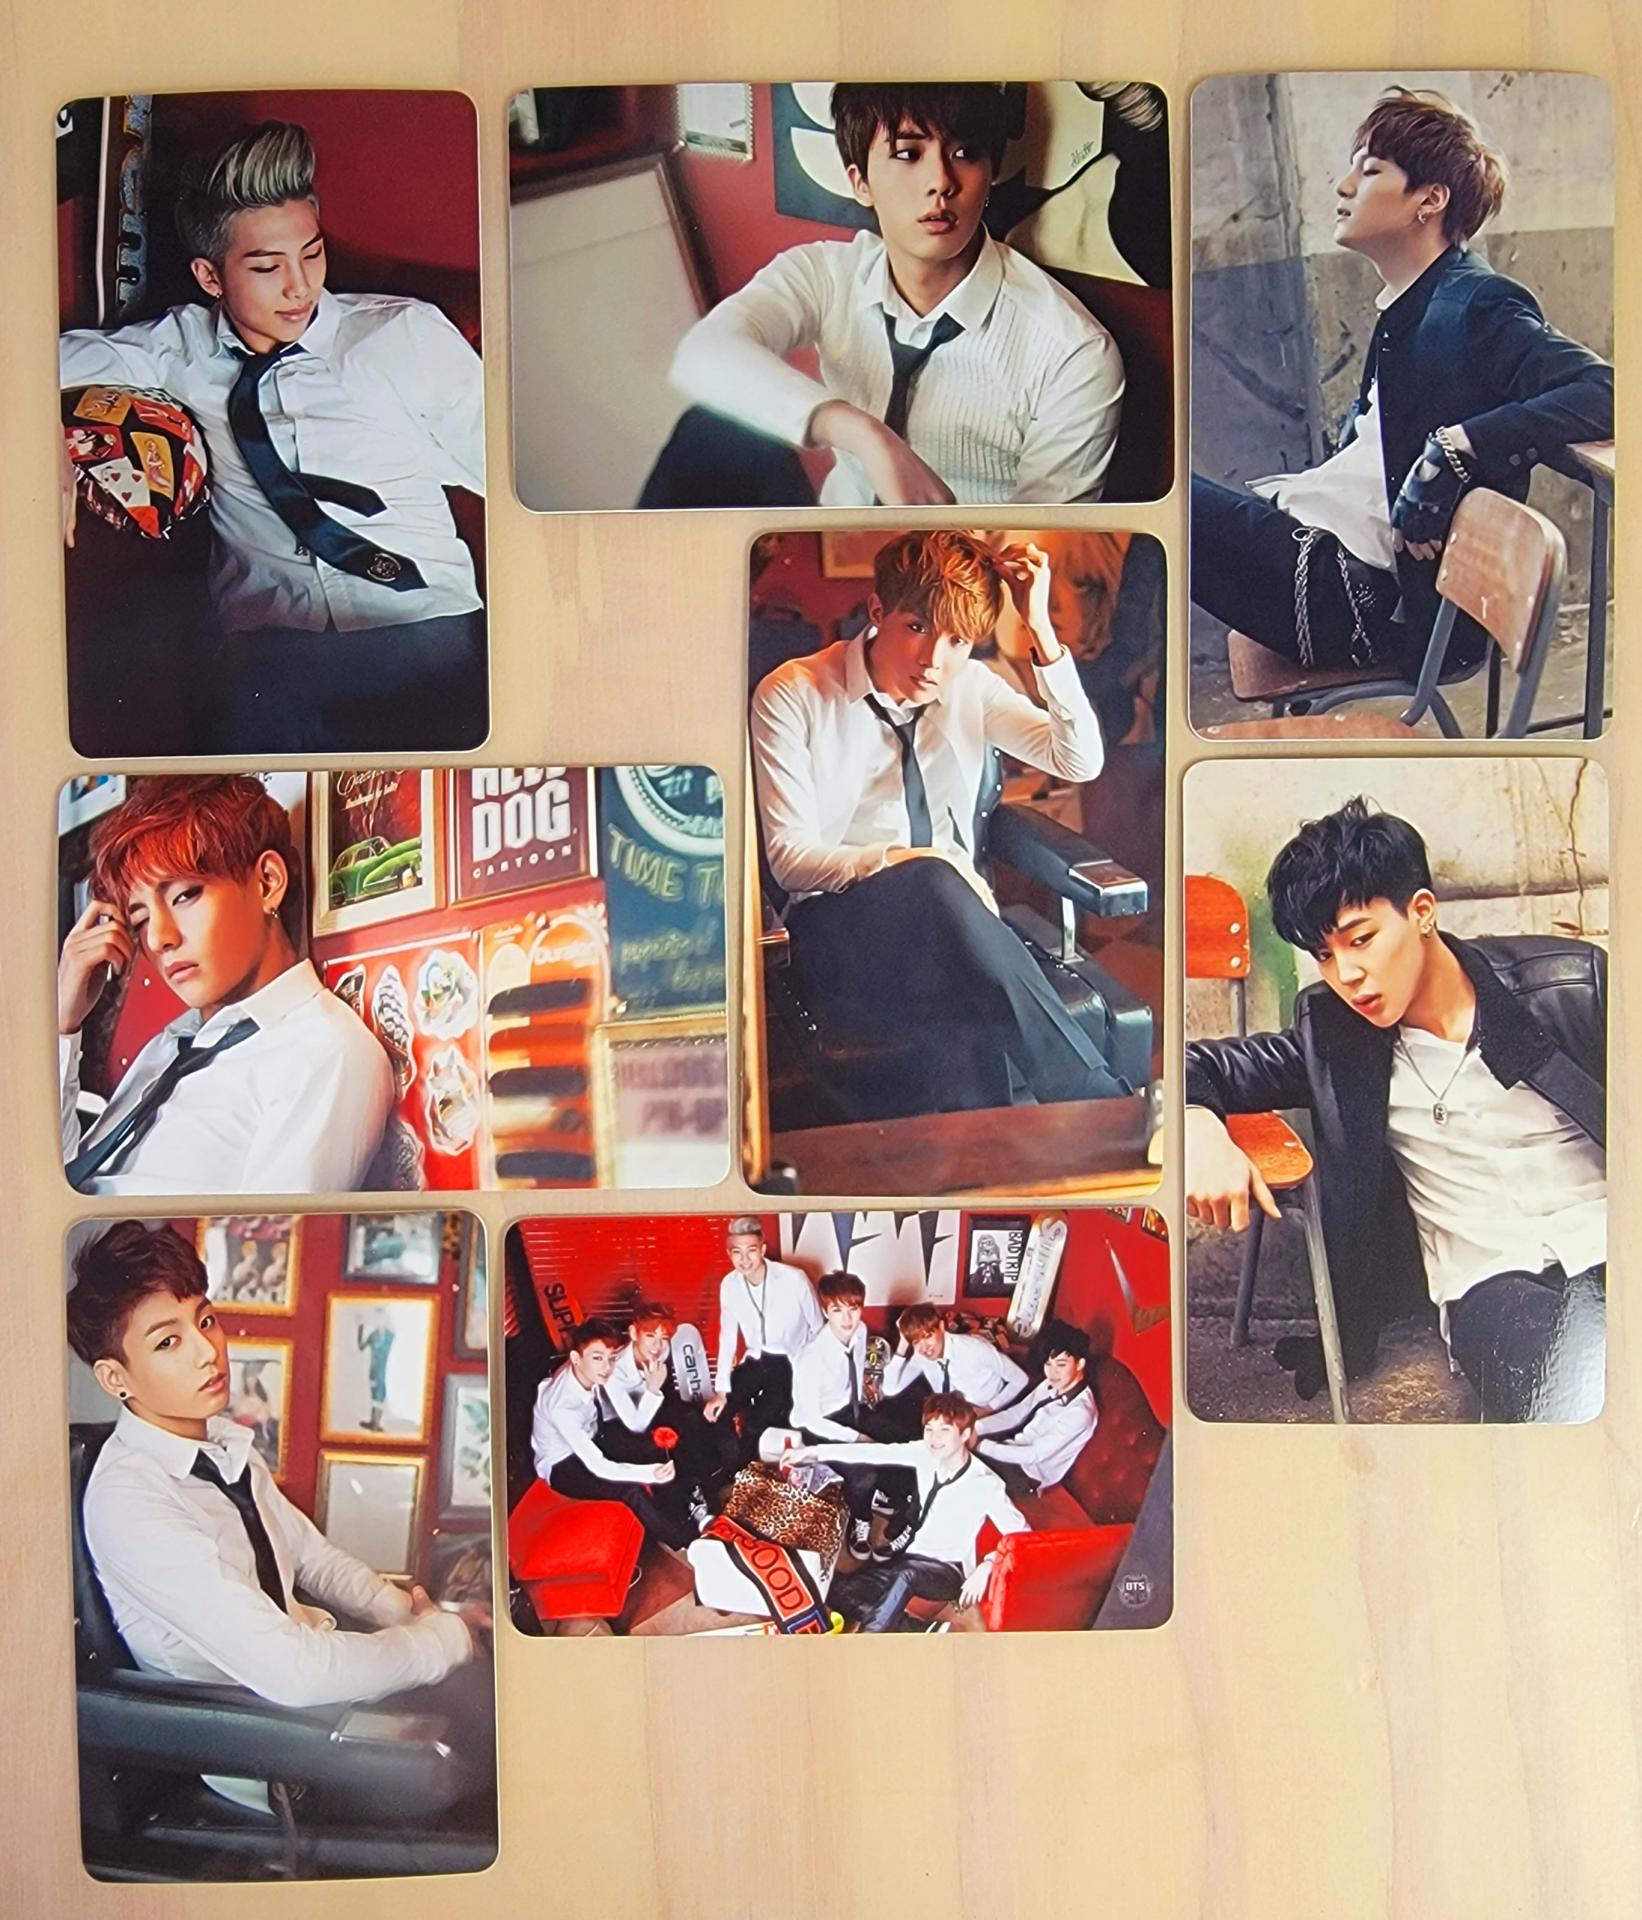 BTS Skool Luv Affair Photocards